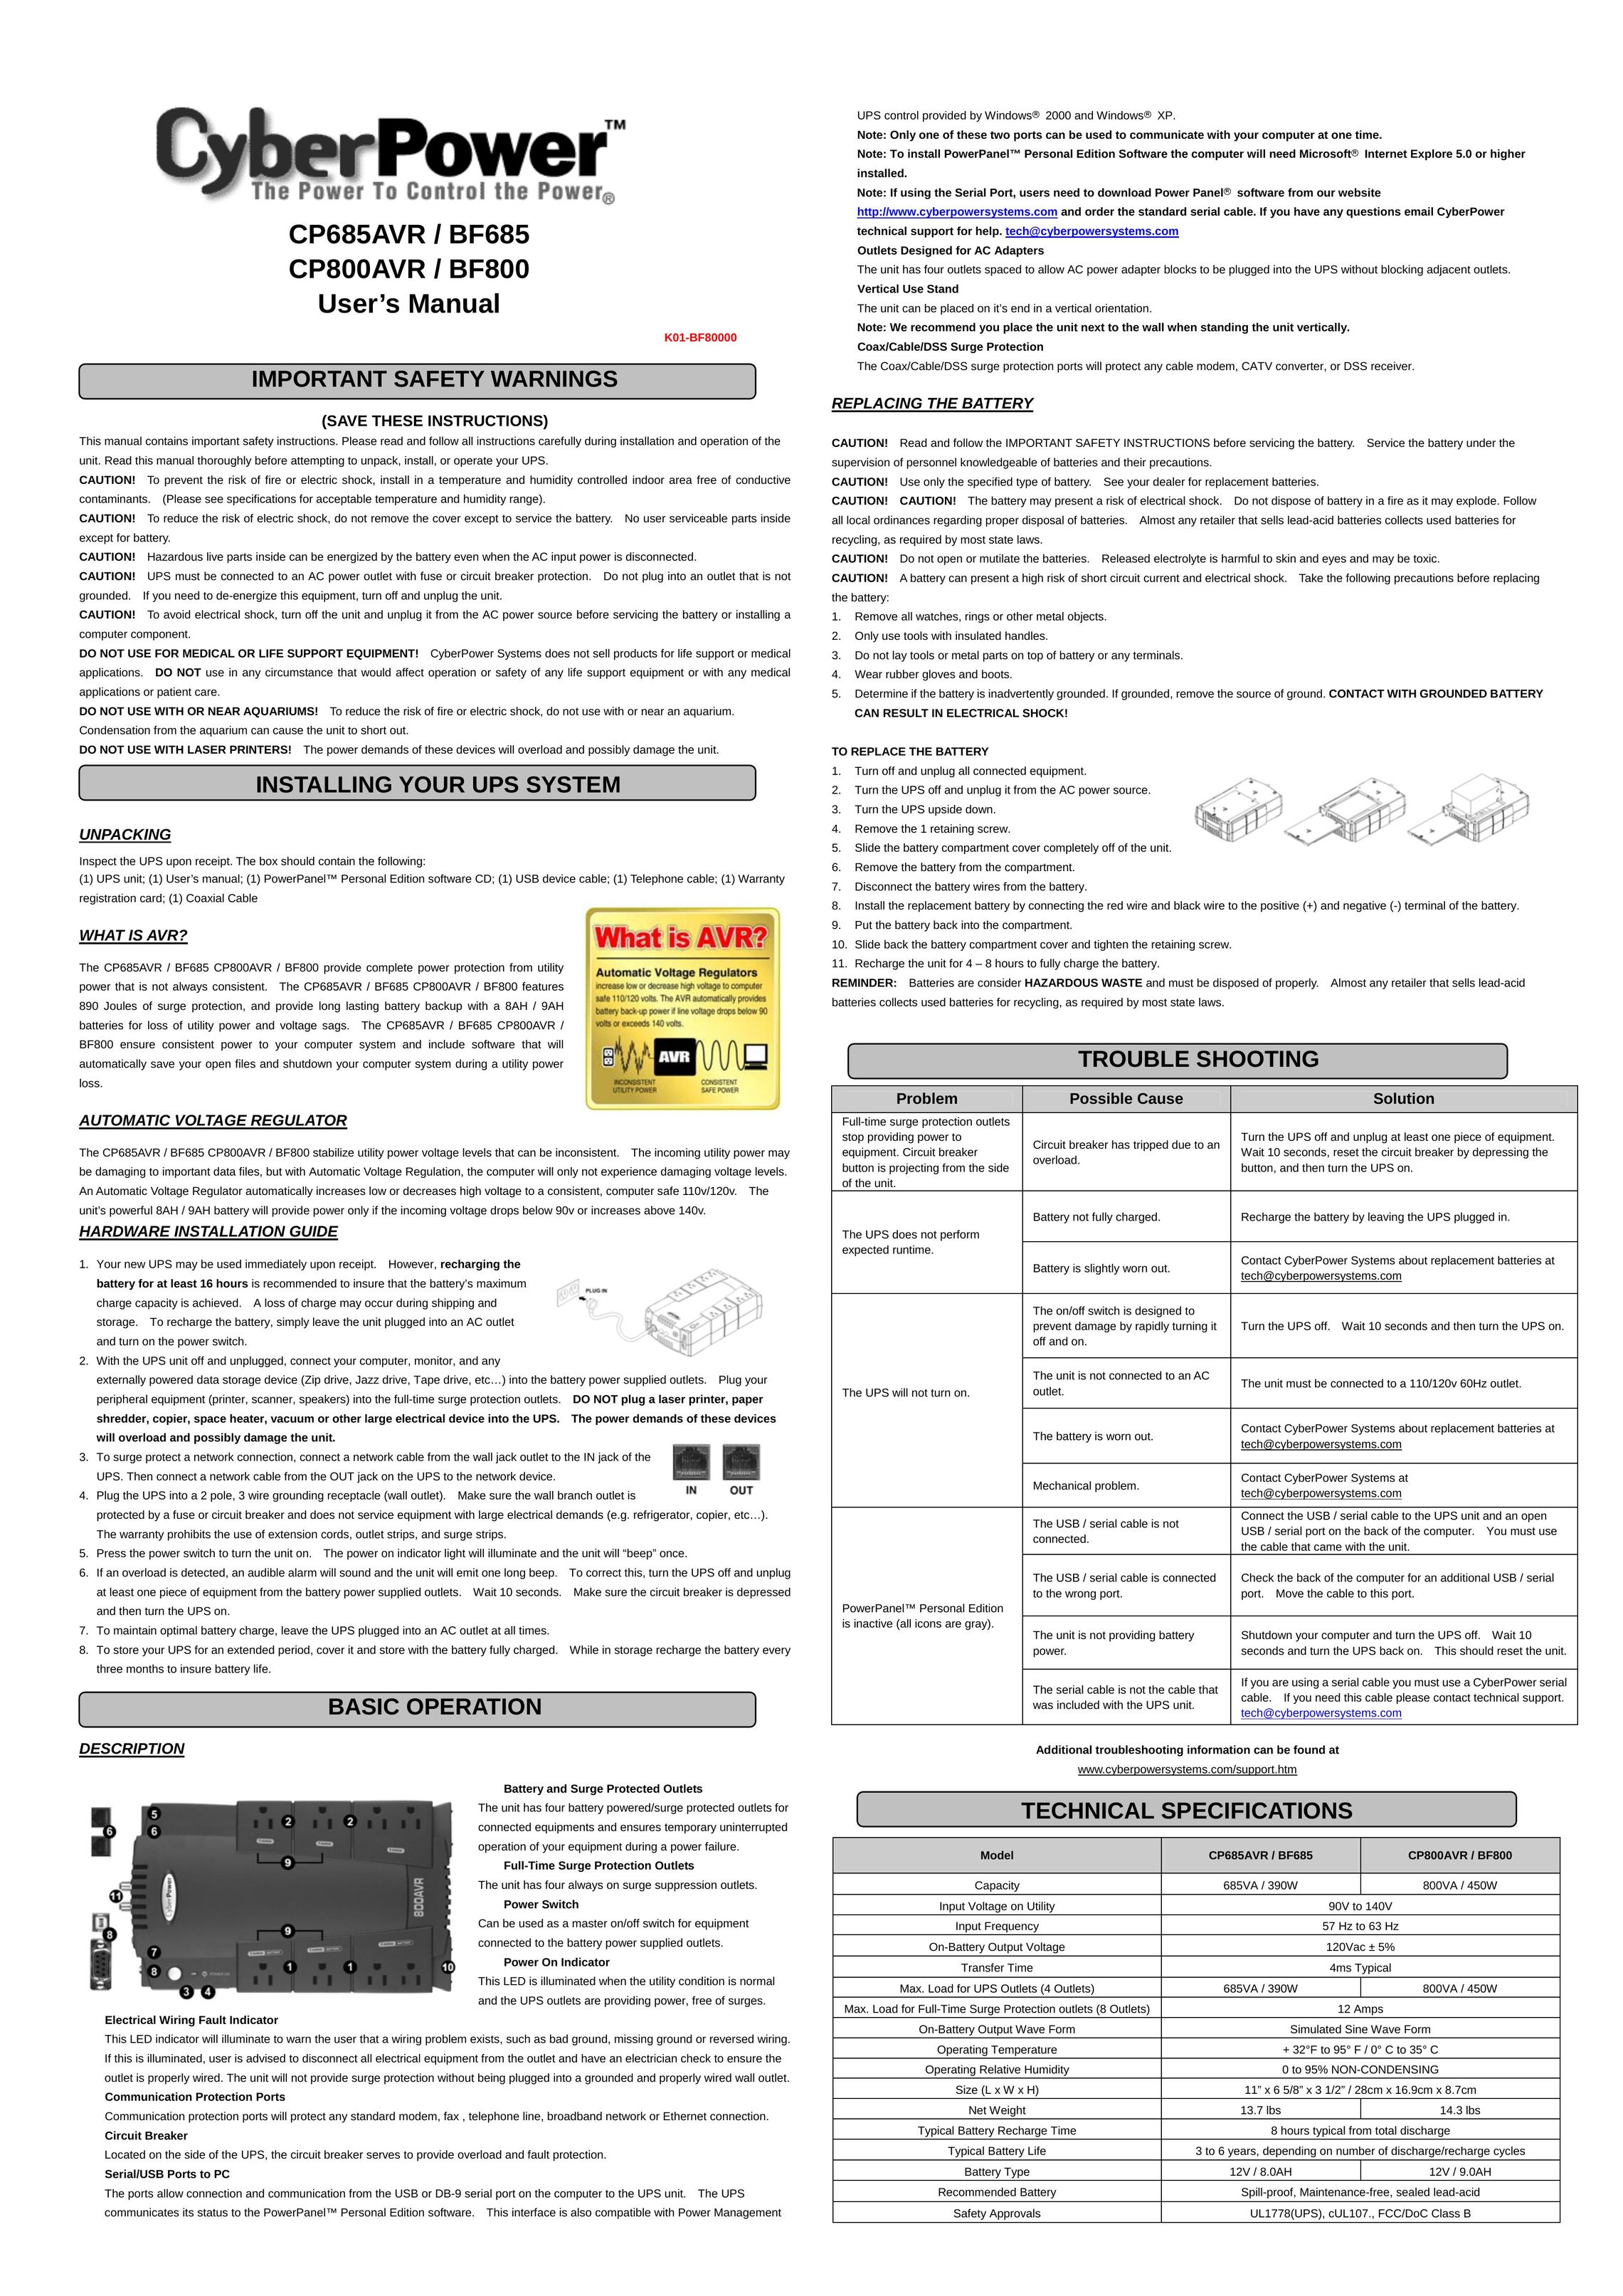 CyberPower CP685AVR / BF685 Power Supply User Manual